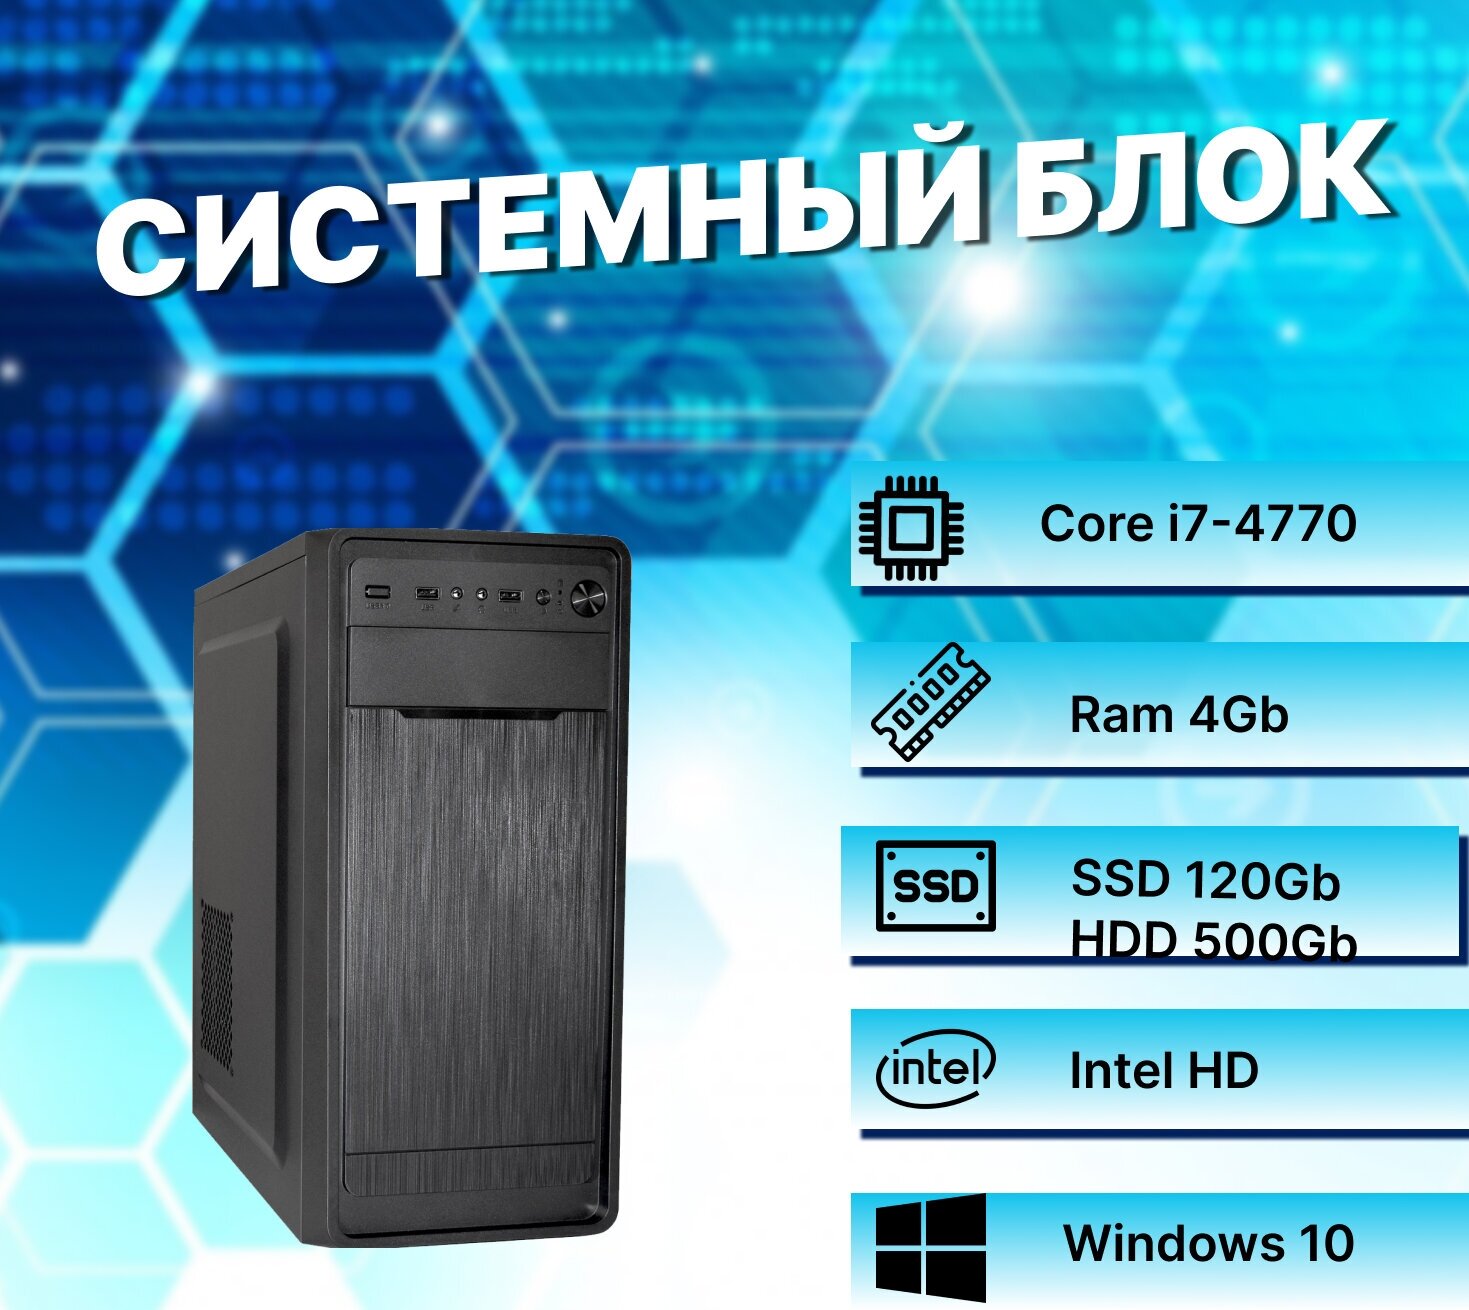 Системный блок Intel Core i7-4770 (3.4ГГц)/ RAM 4Gb/ SSD 120Gb/ HDD 500Gb/ Intel HD/ Windows 10 Pro